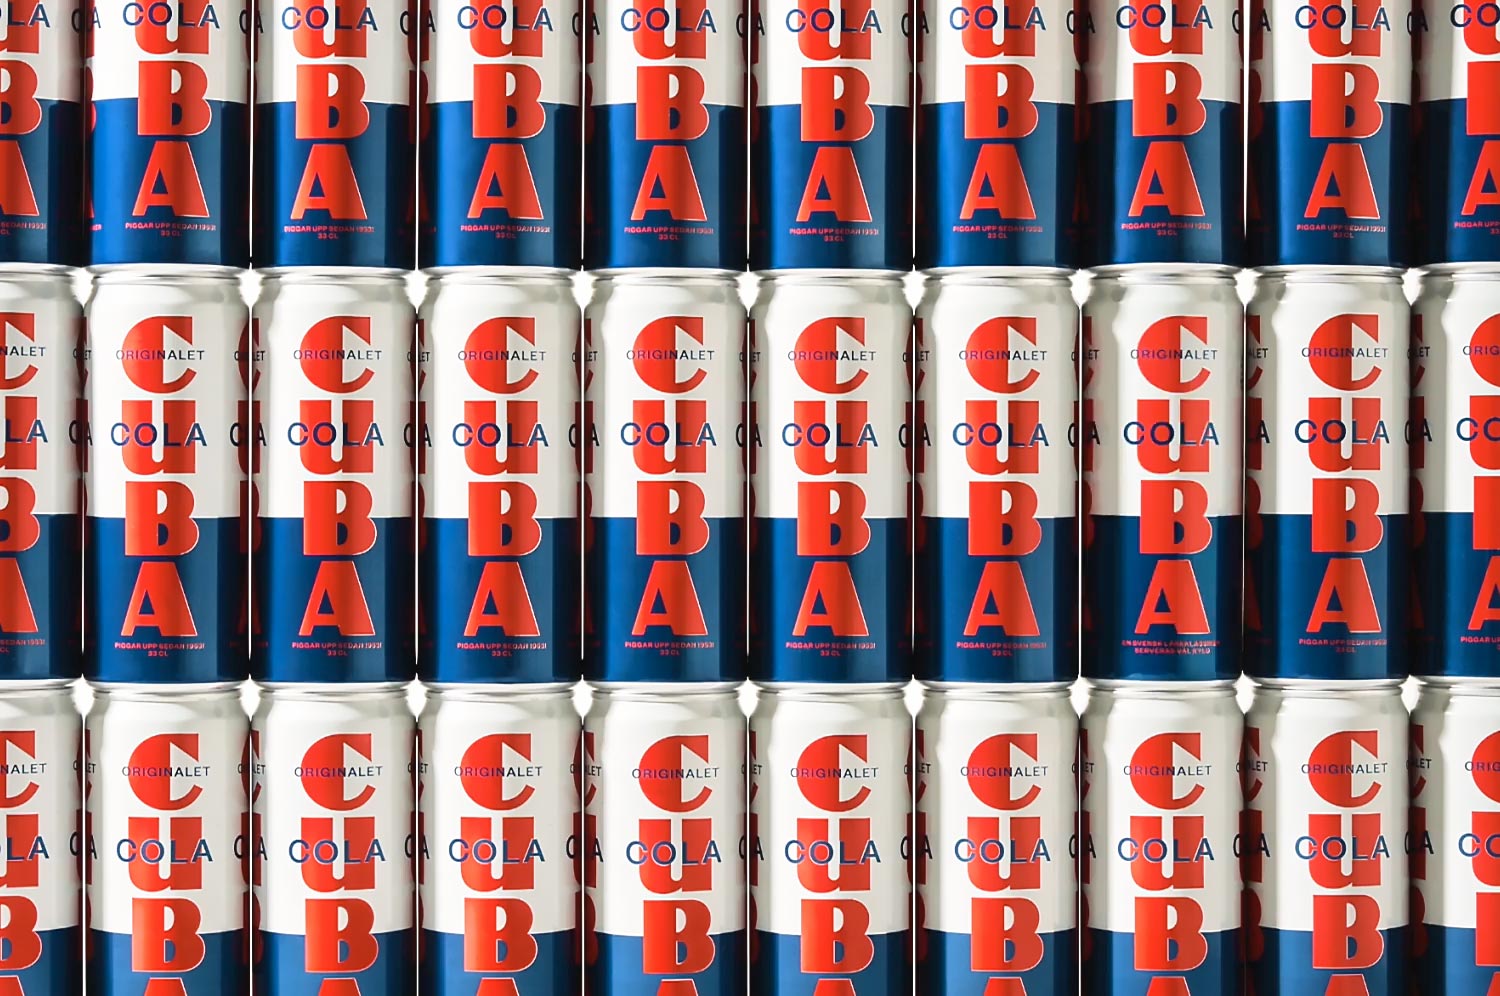 Neumeister packaging design Cuba Cola Original cans